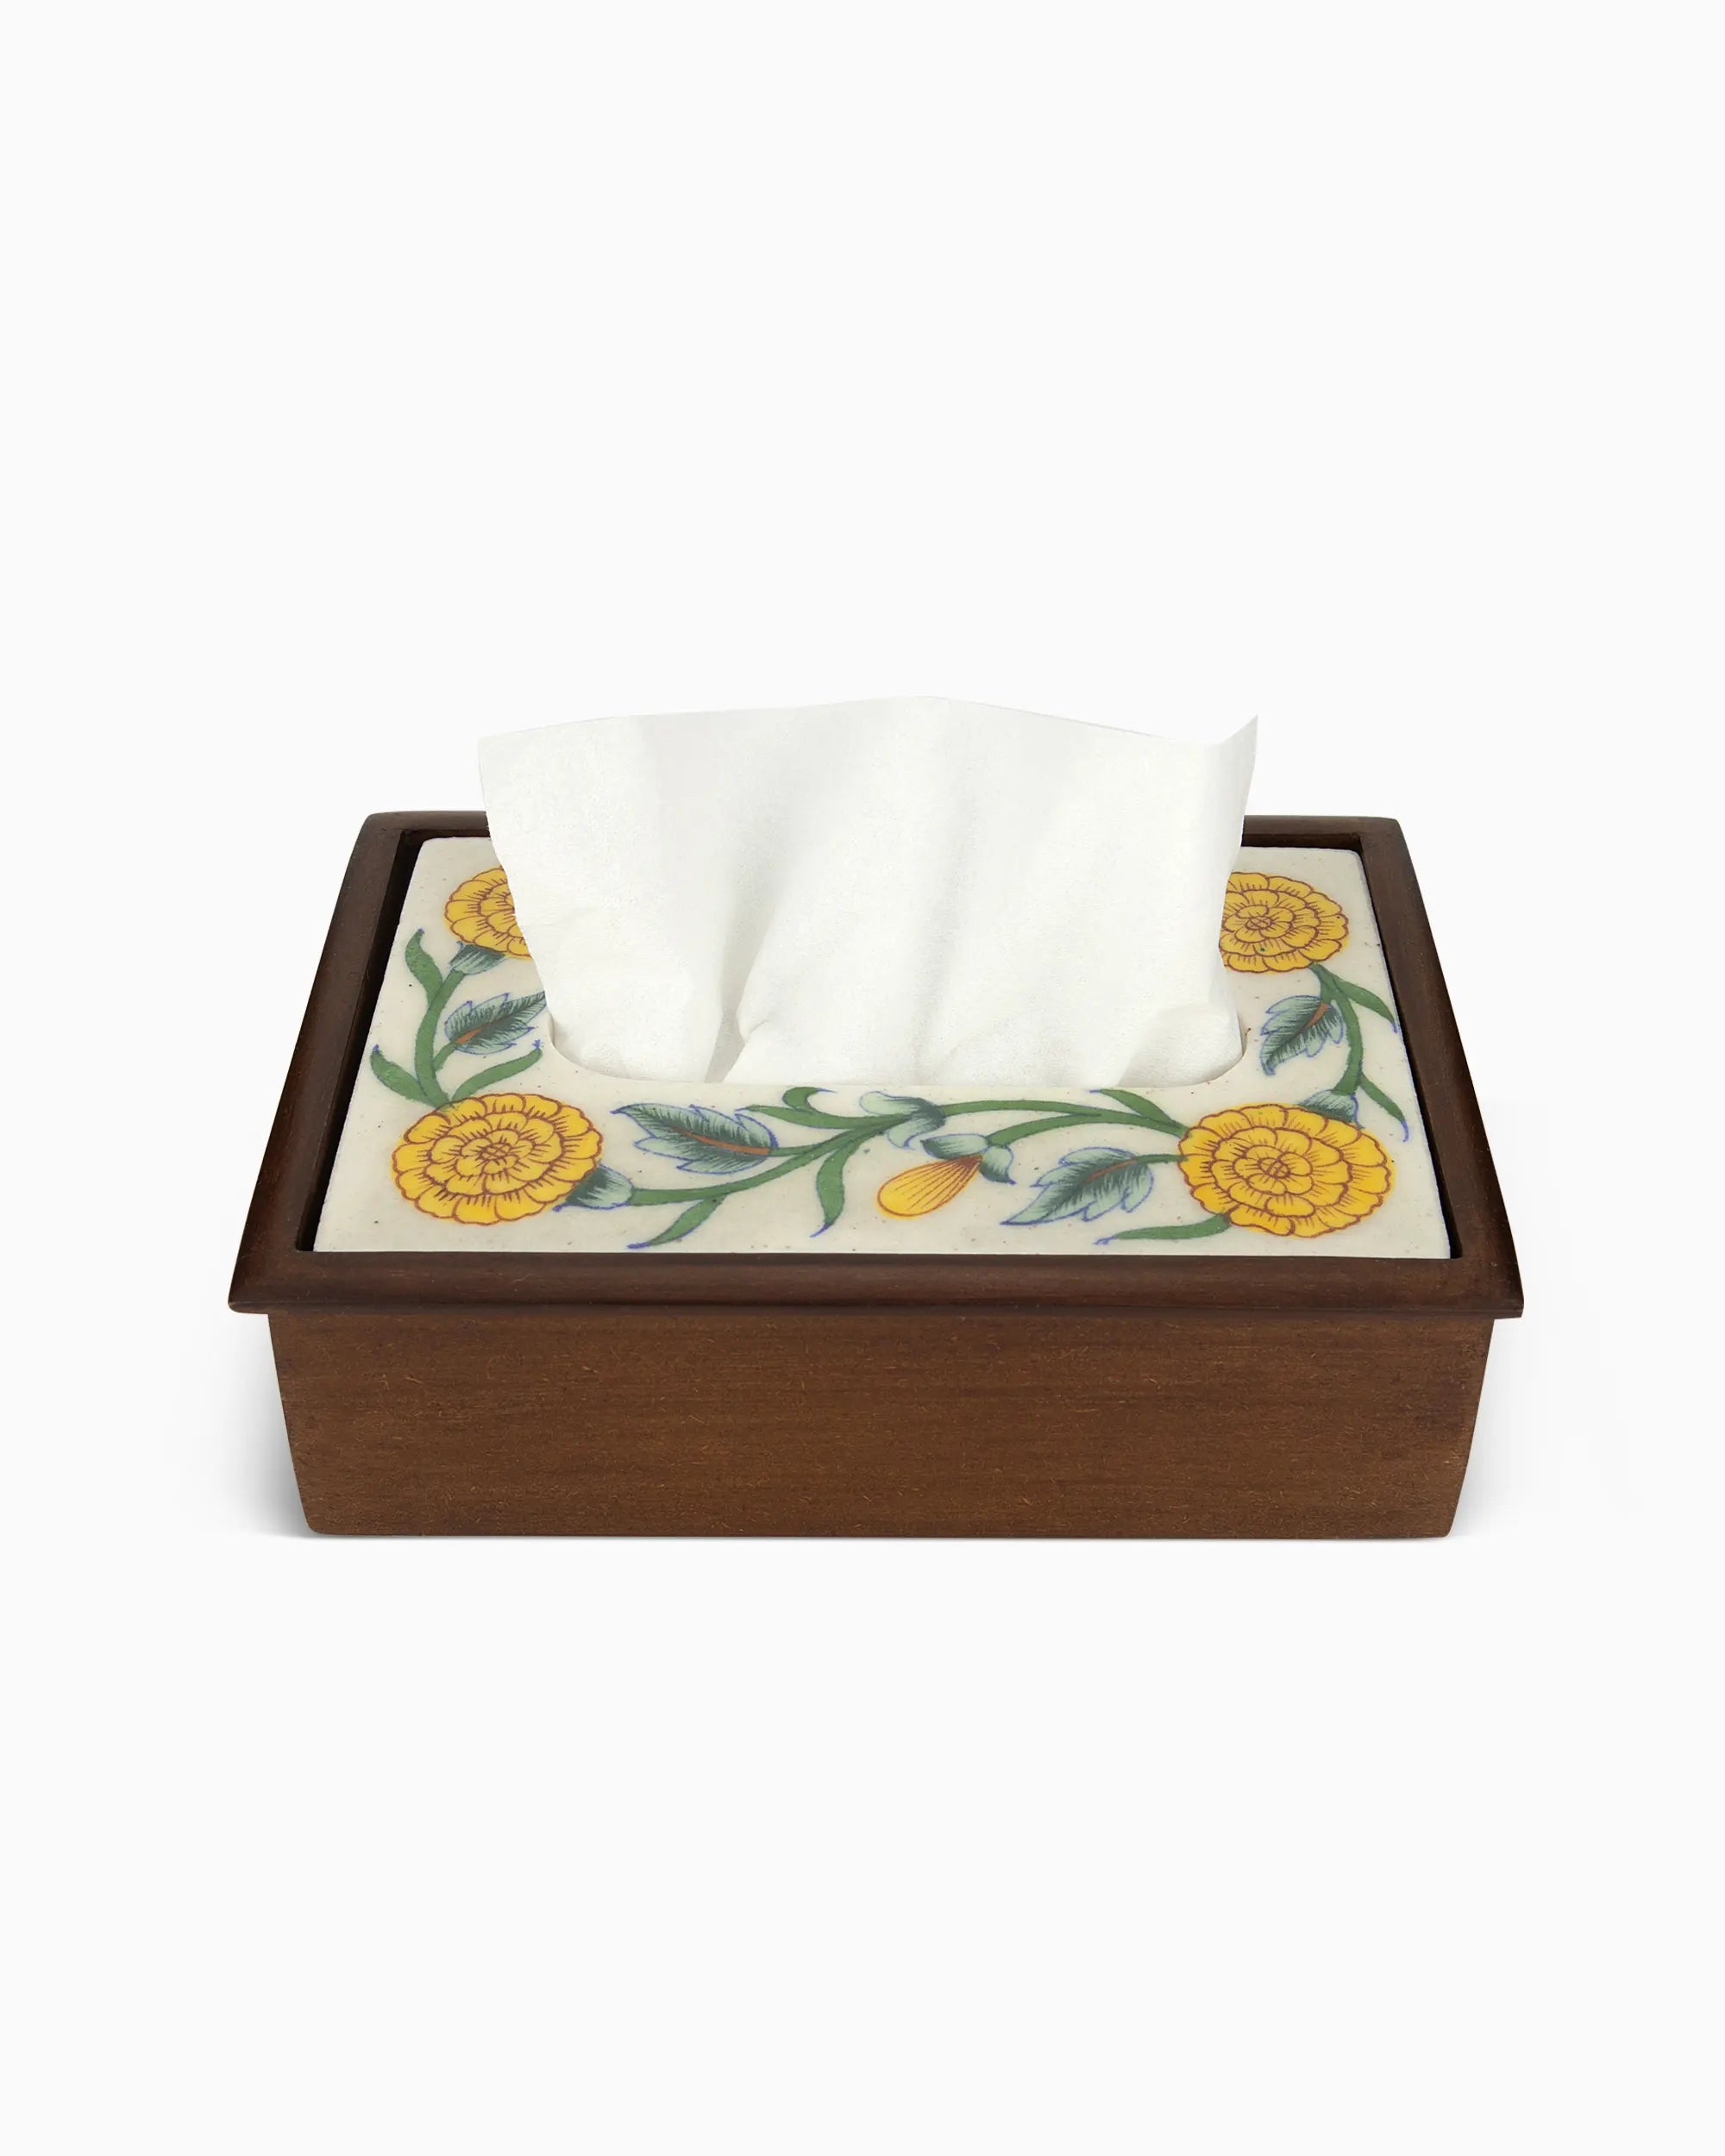 Wooden Tissue Box Holder with Ceramic Tile